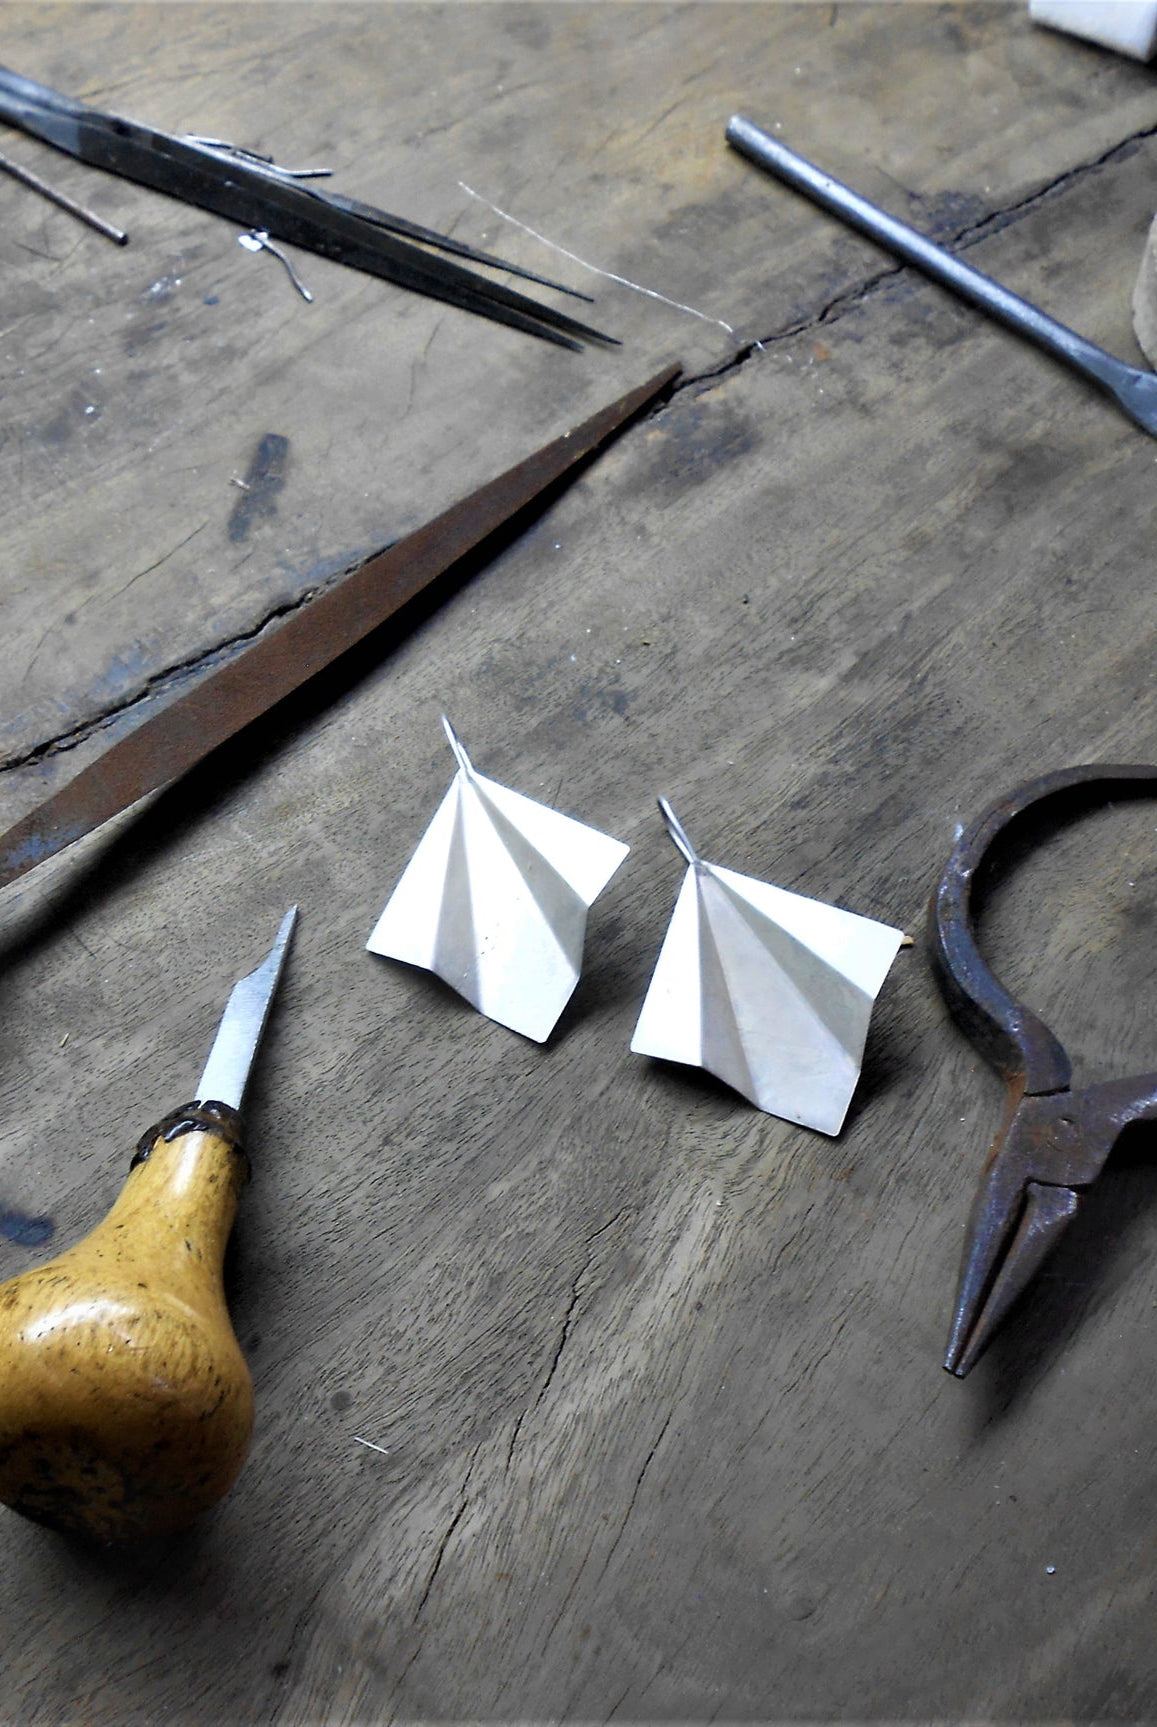 GARVI Origami Two-Fold Earrings - CiceroniBaka